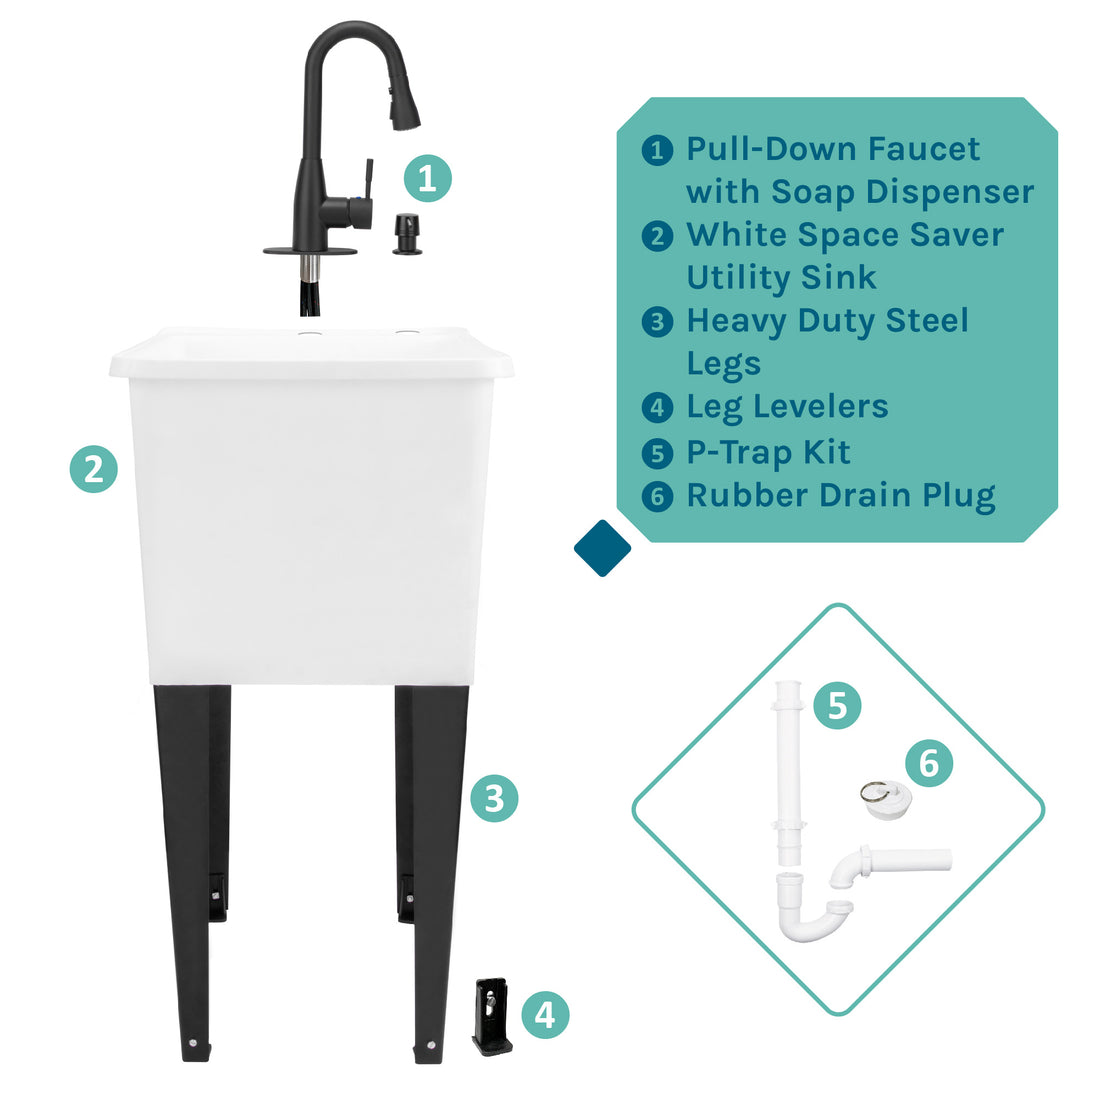 Tehila Space Saver Freestanding White Utility Sink with Black Finish Low-Profile Pull-Down Faucet - Utility sinks vanites Tehila